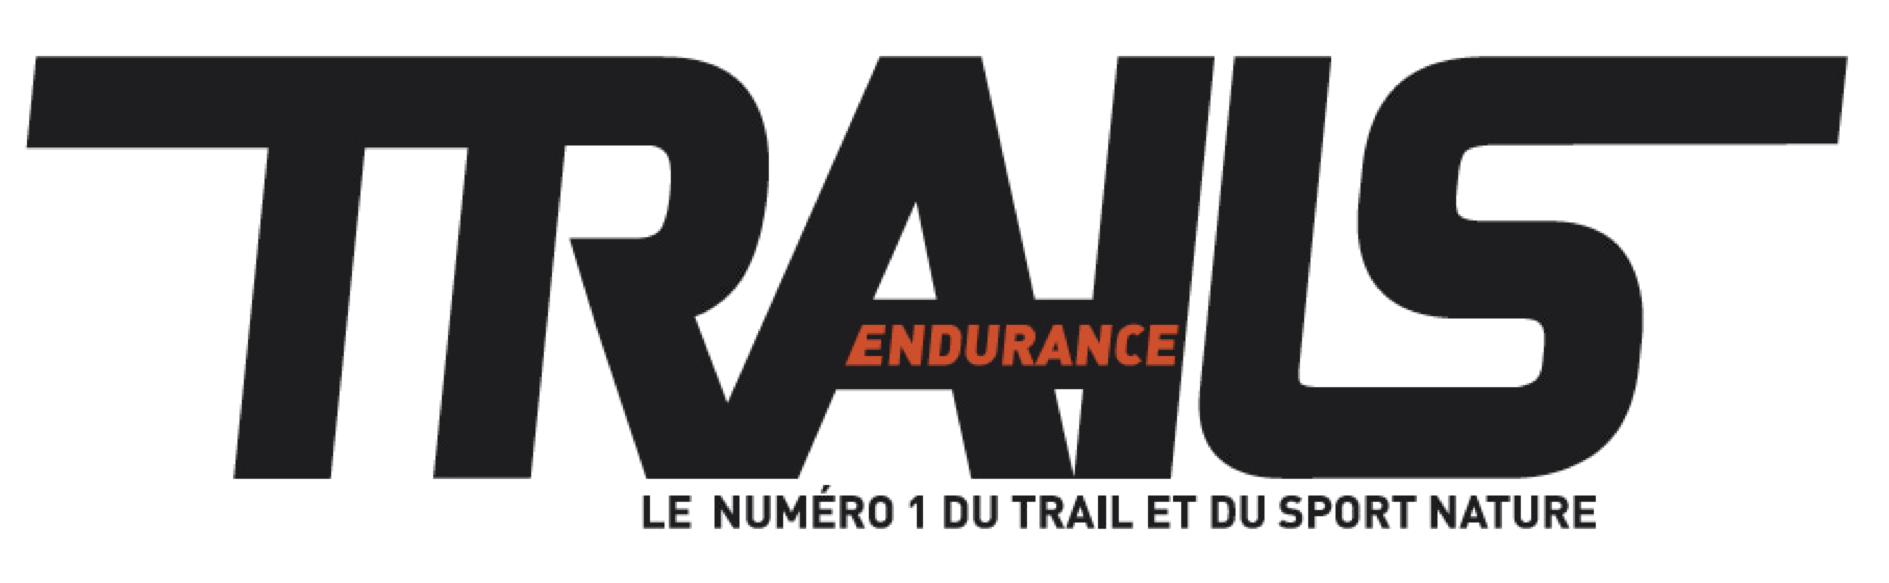 logo-endurance-mag-2017-Edilivre